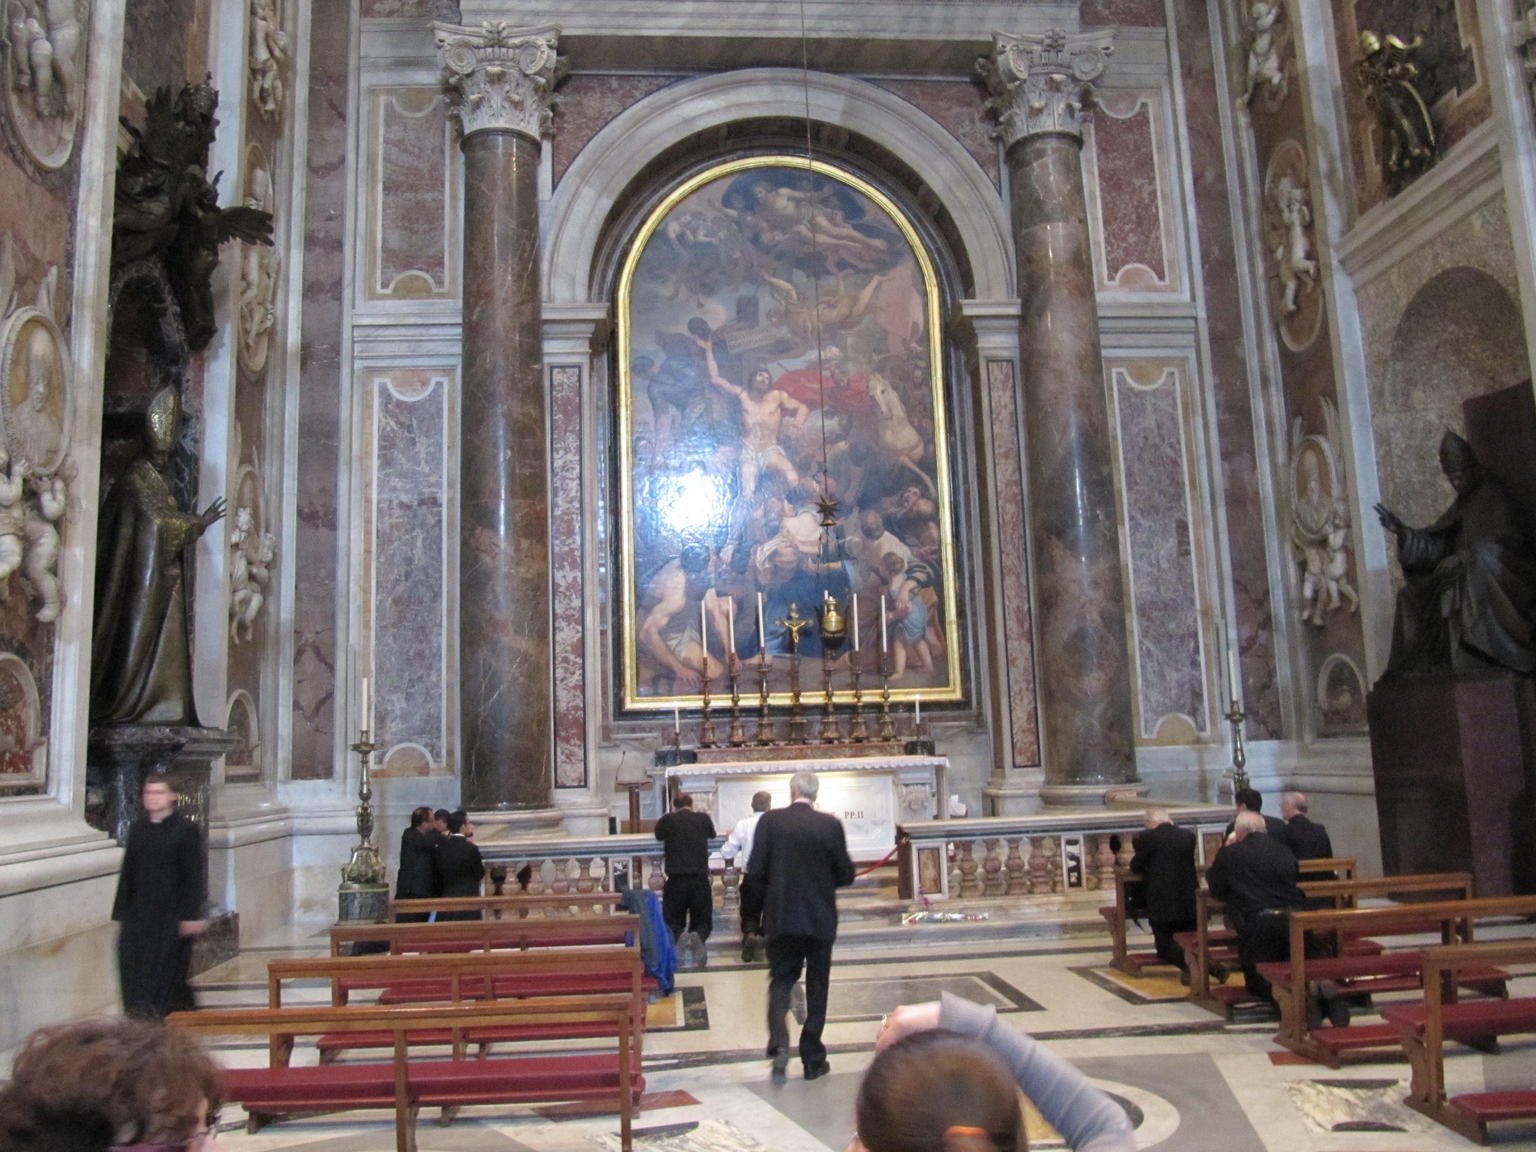 Skip the Line: Vatican Museums Walking Tour including Sistine Chapel, Rapha